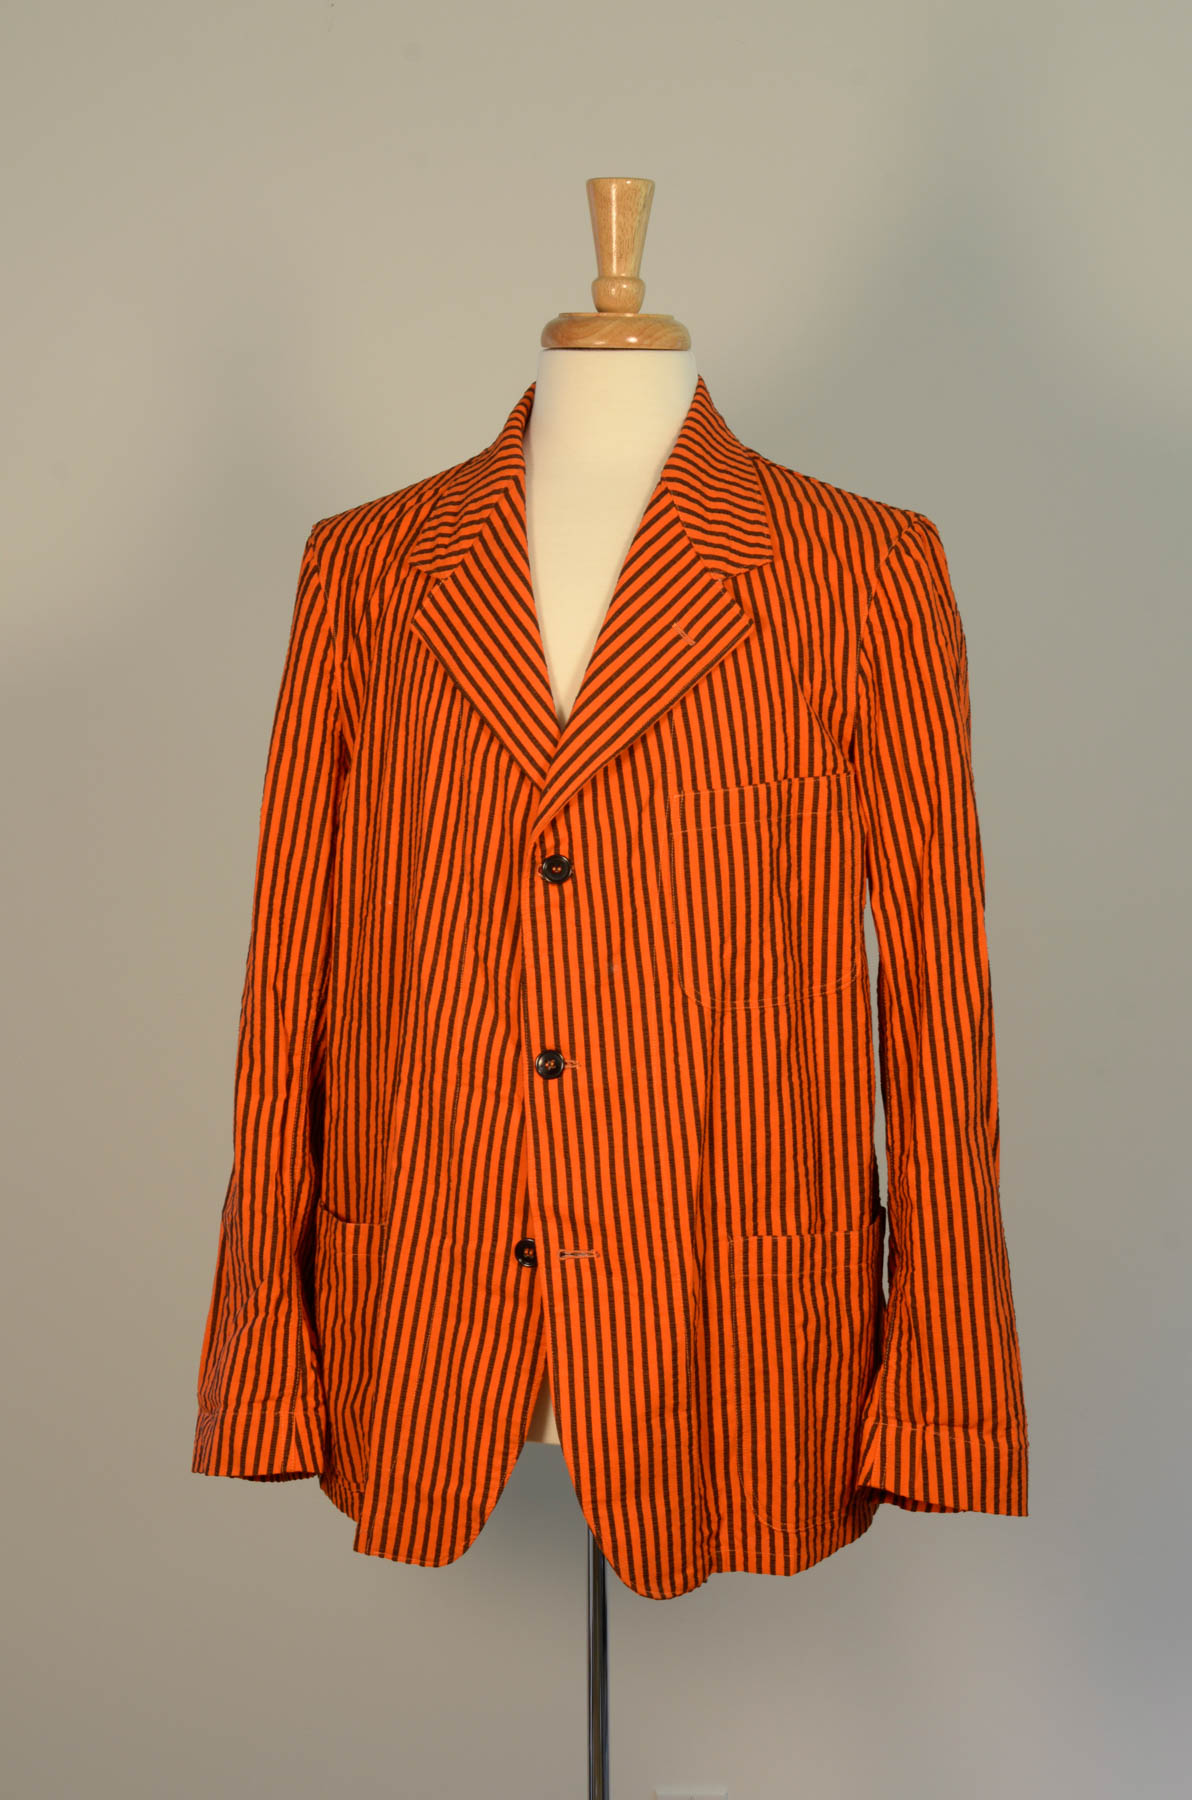 1924 Reunion Jacket II | Princetoniana Museum